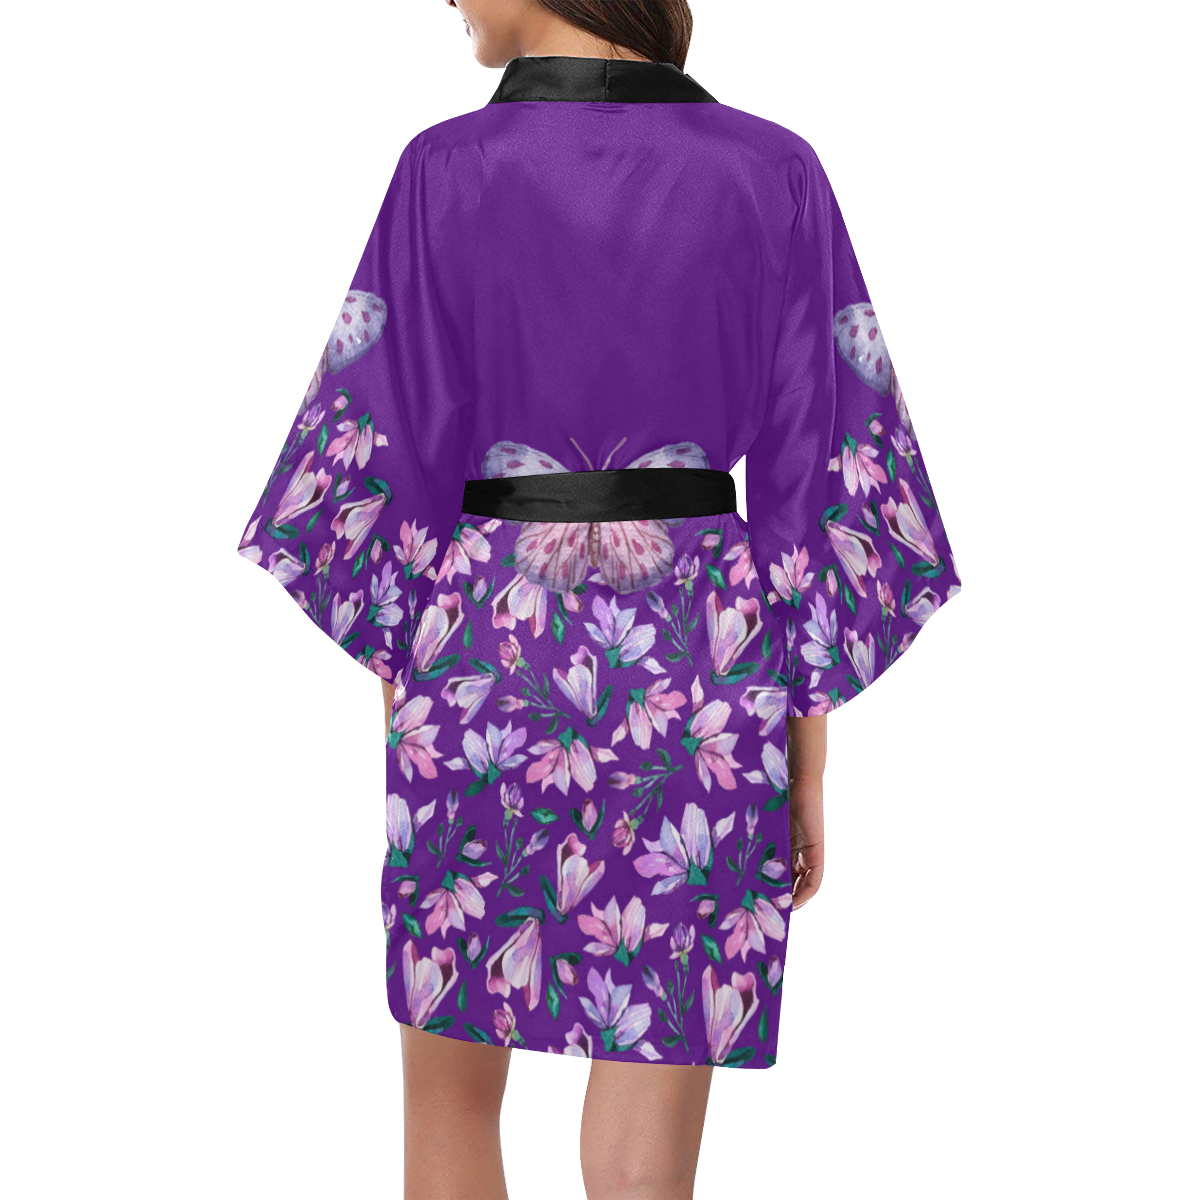 Purple Spring Butterfly Kimono Robe